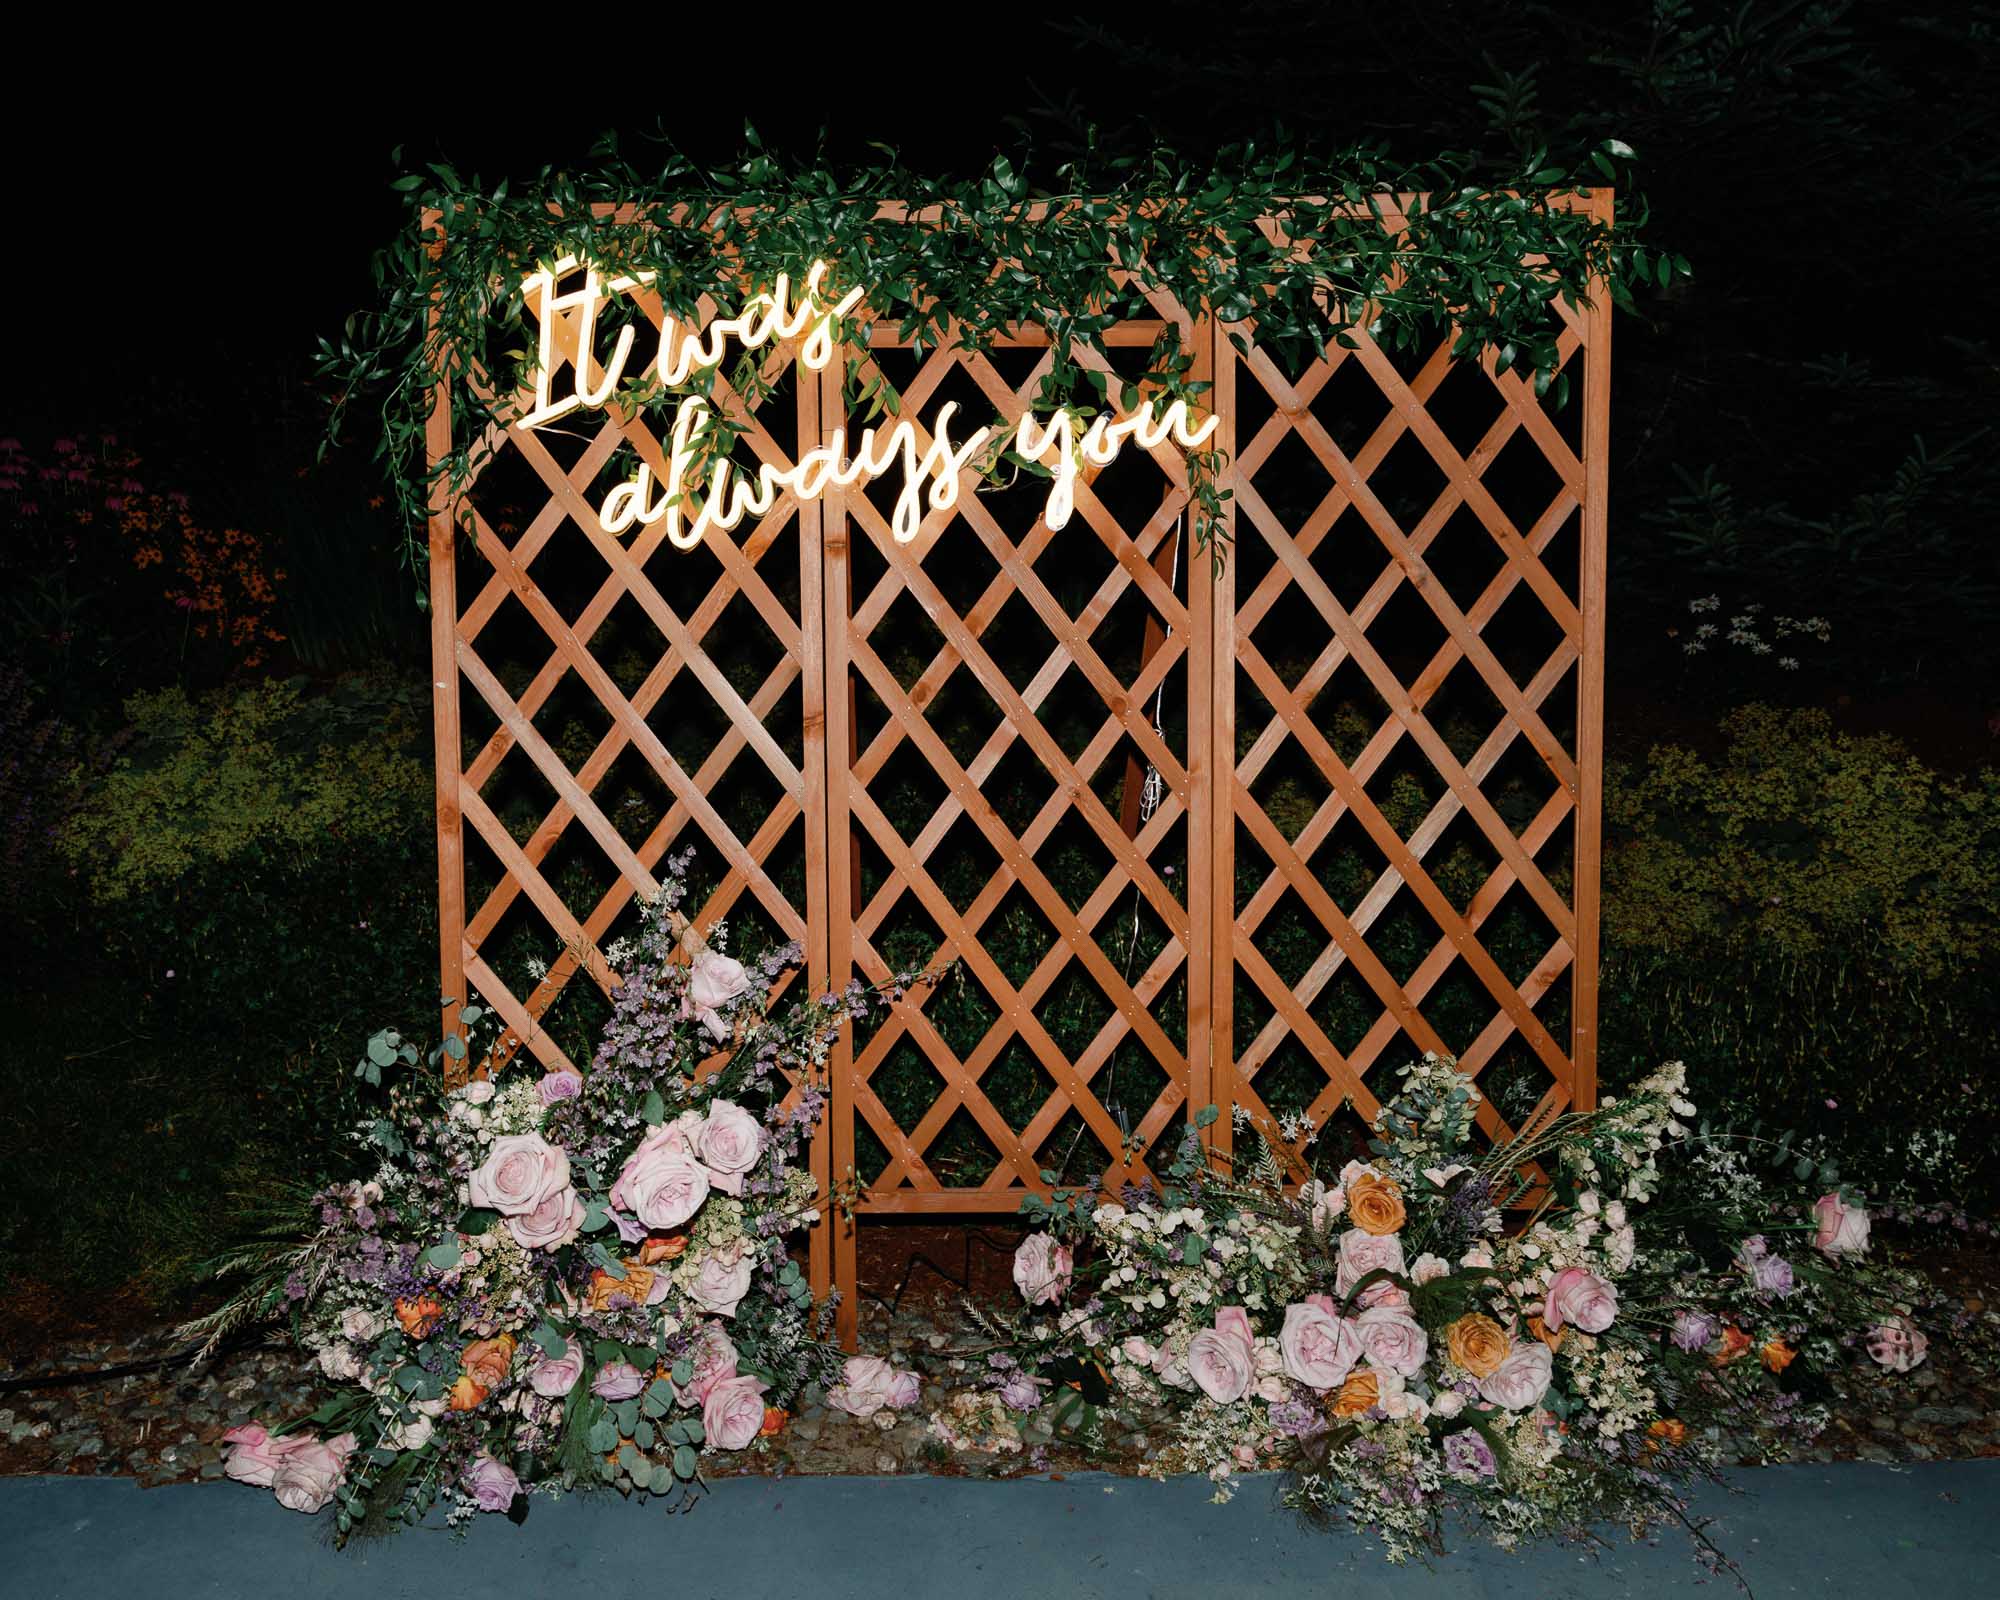 3-panel lattice with floral arrangements, neon light reads "It was always you" - heartfelt guest experience